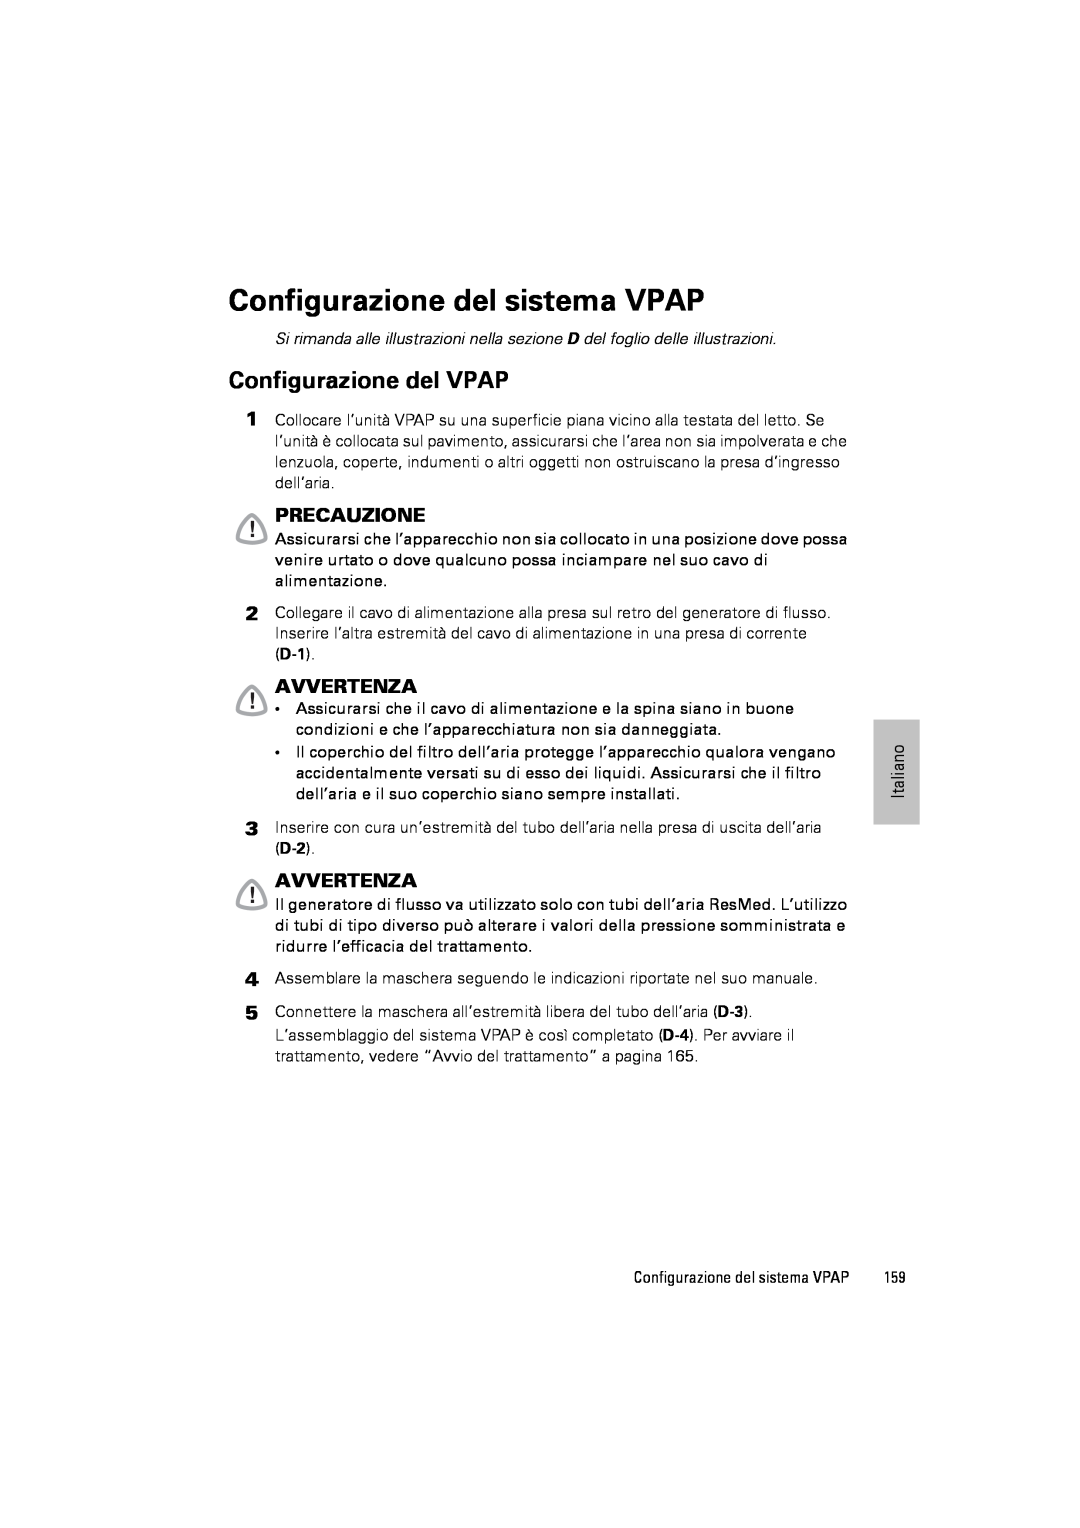 ResMed III & III ST user manual Configurazione del sistema VPAP, Configurazione del VPAP, Precauzione, Avvertenza 